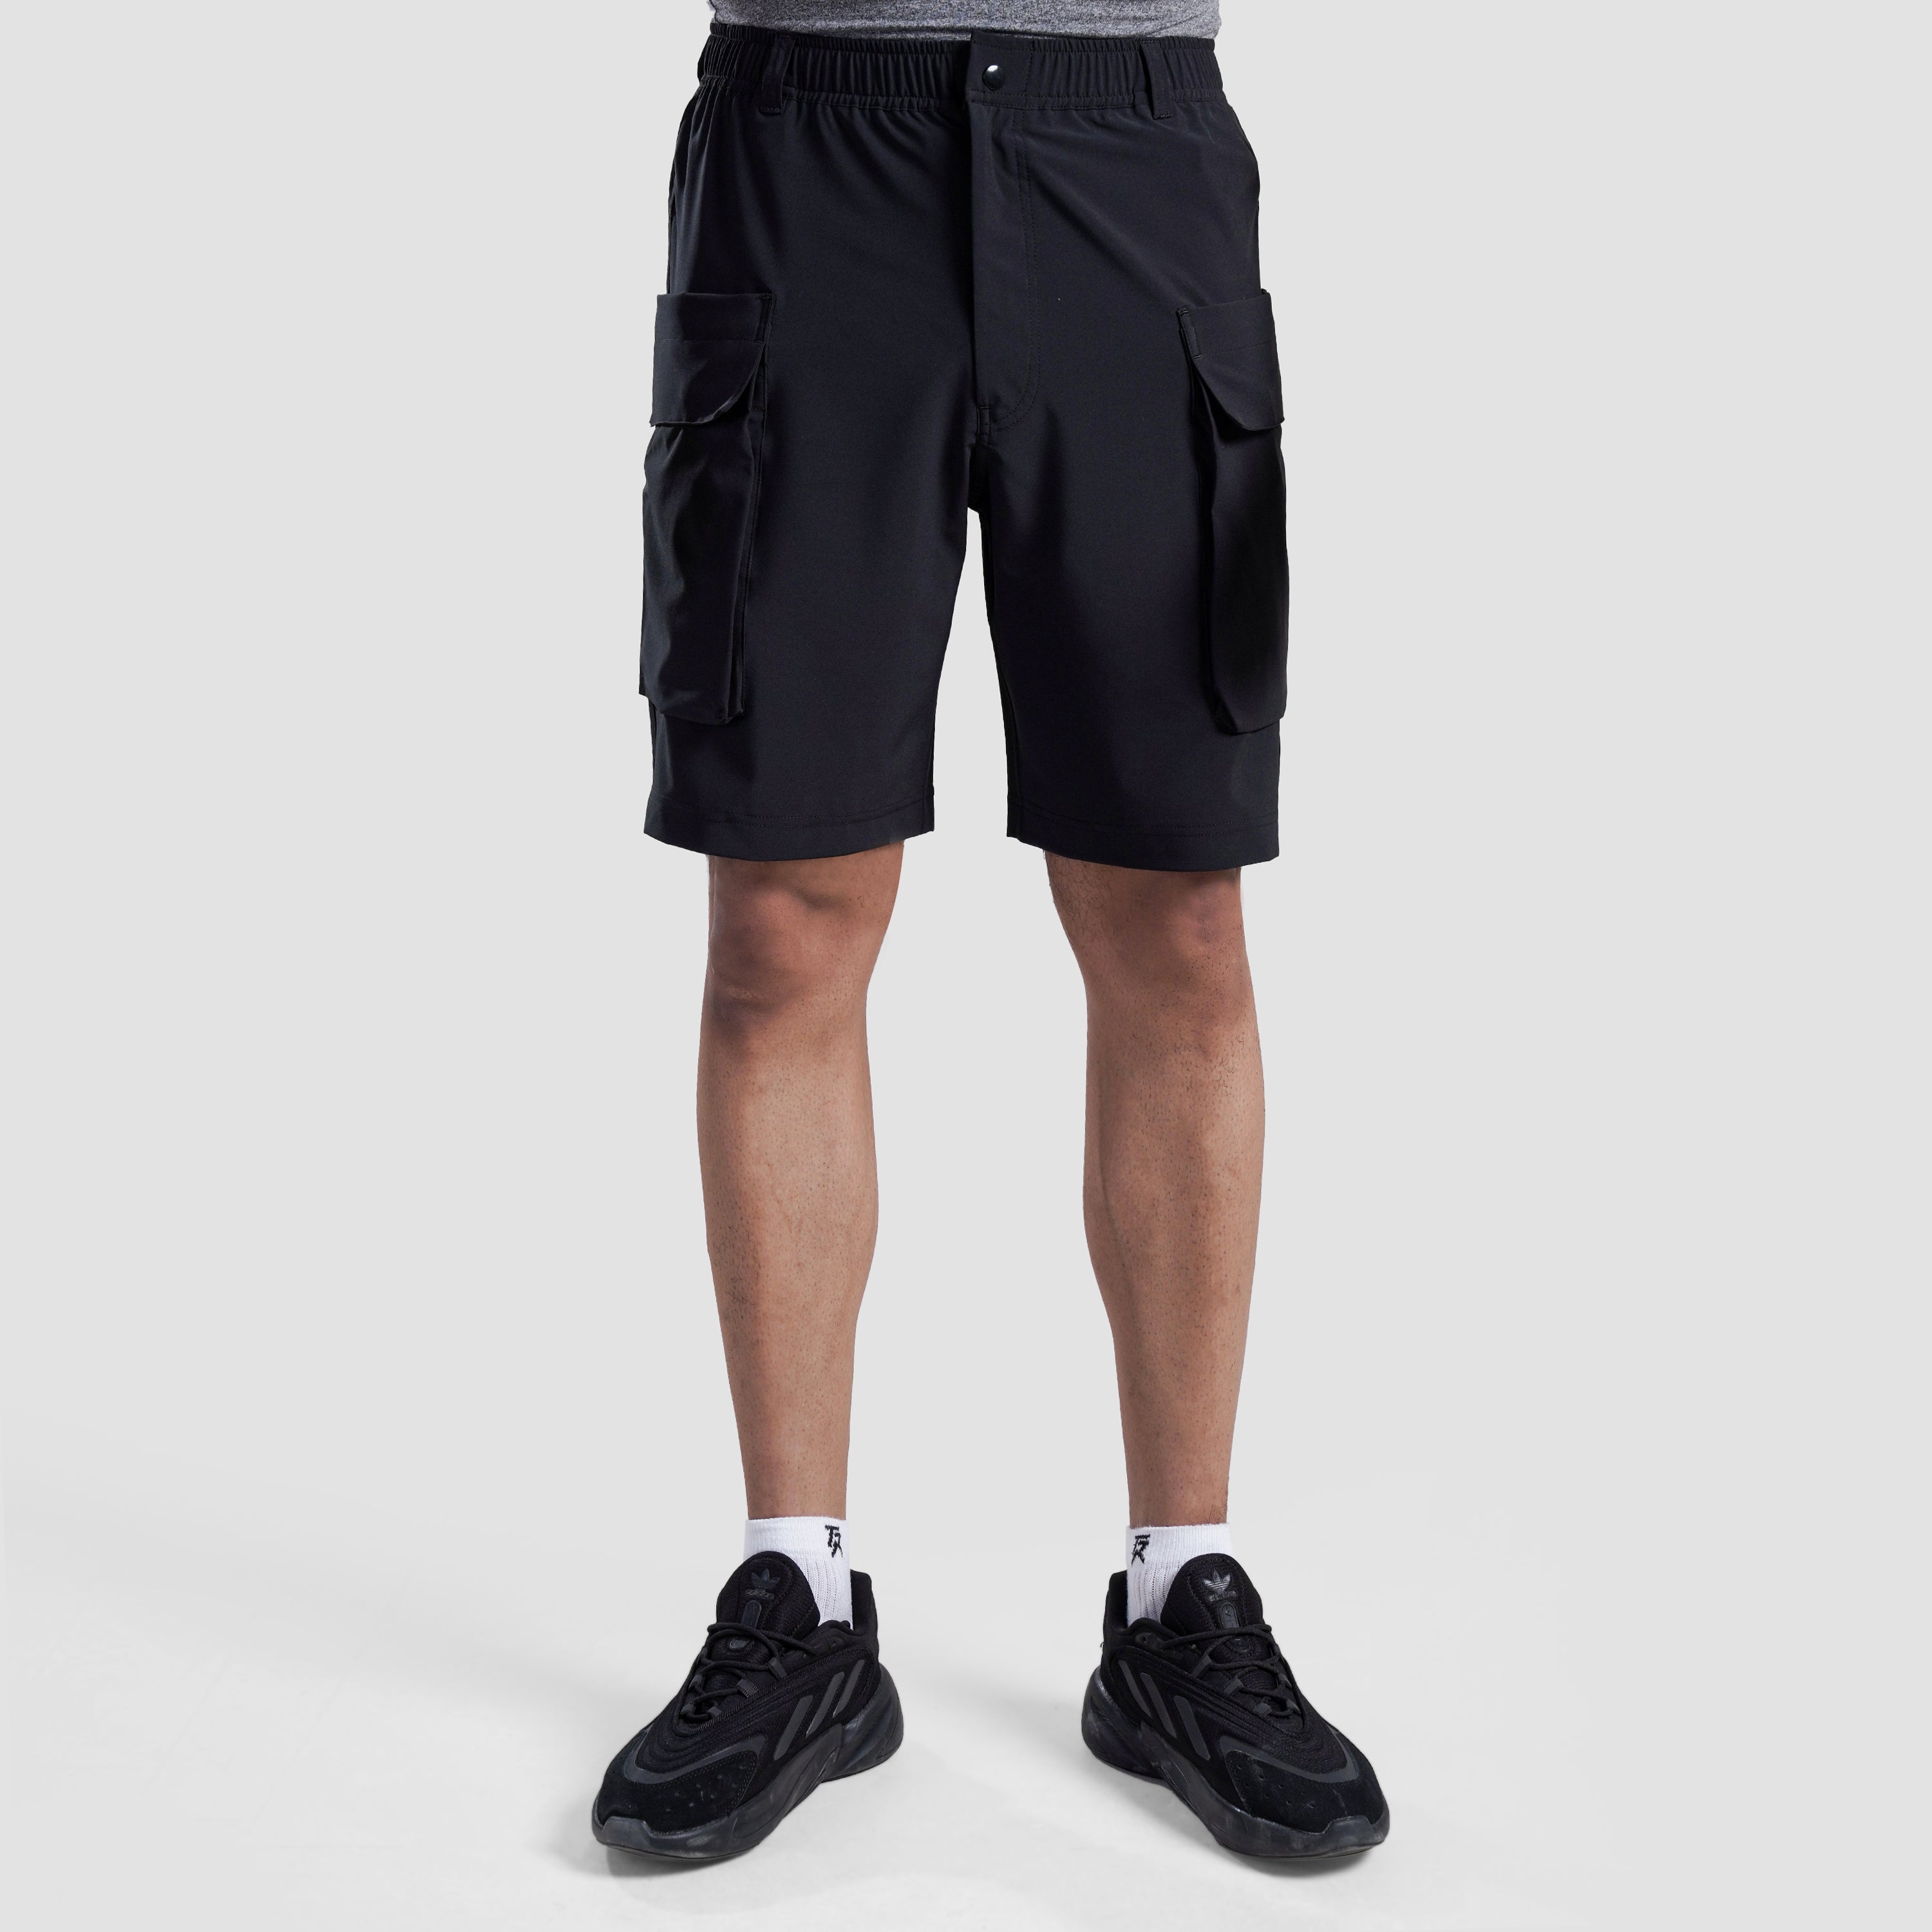 GA Micro Shorts (Black)